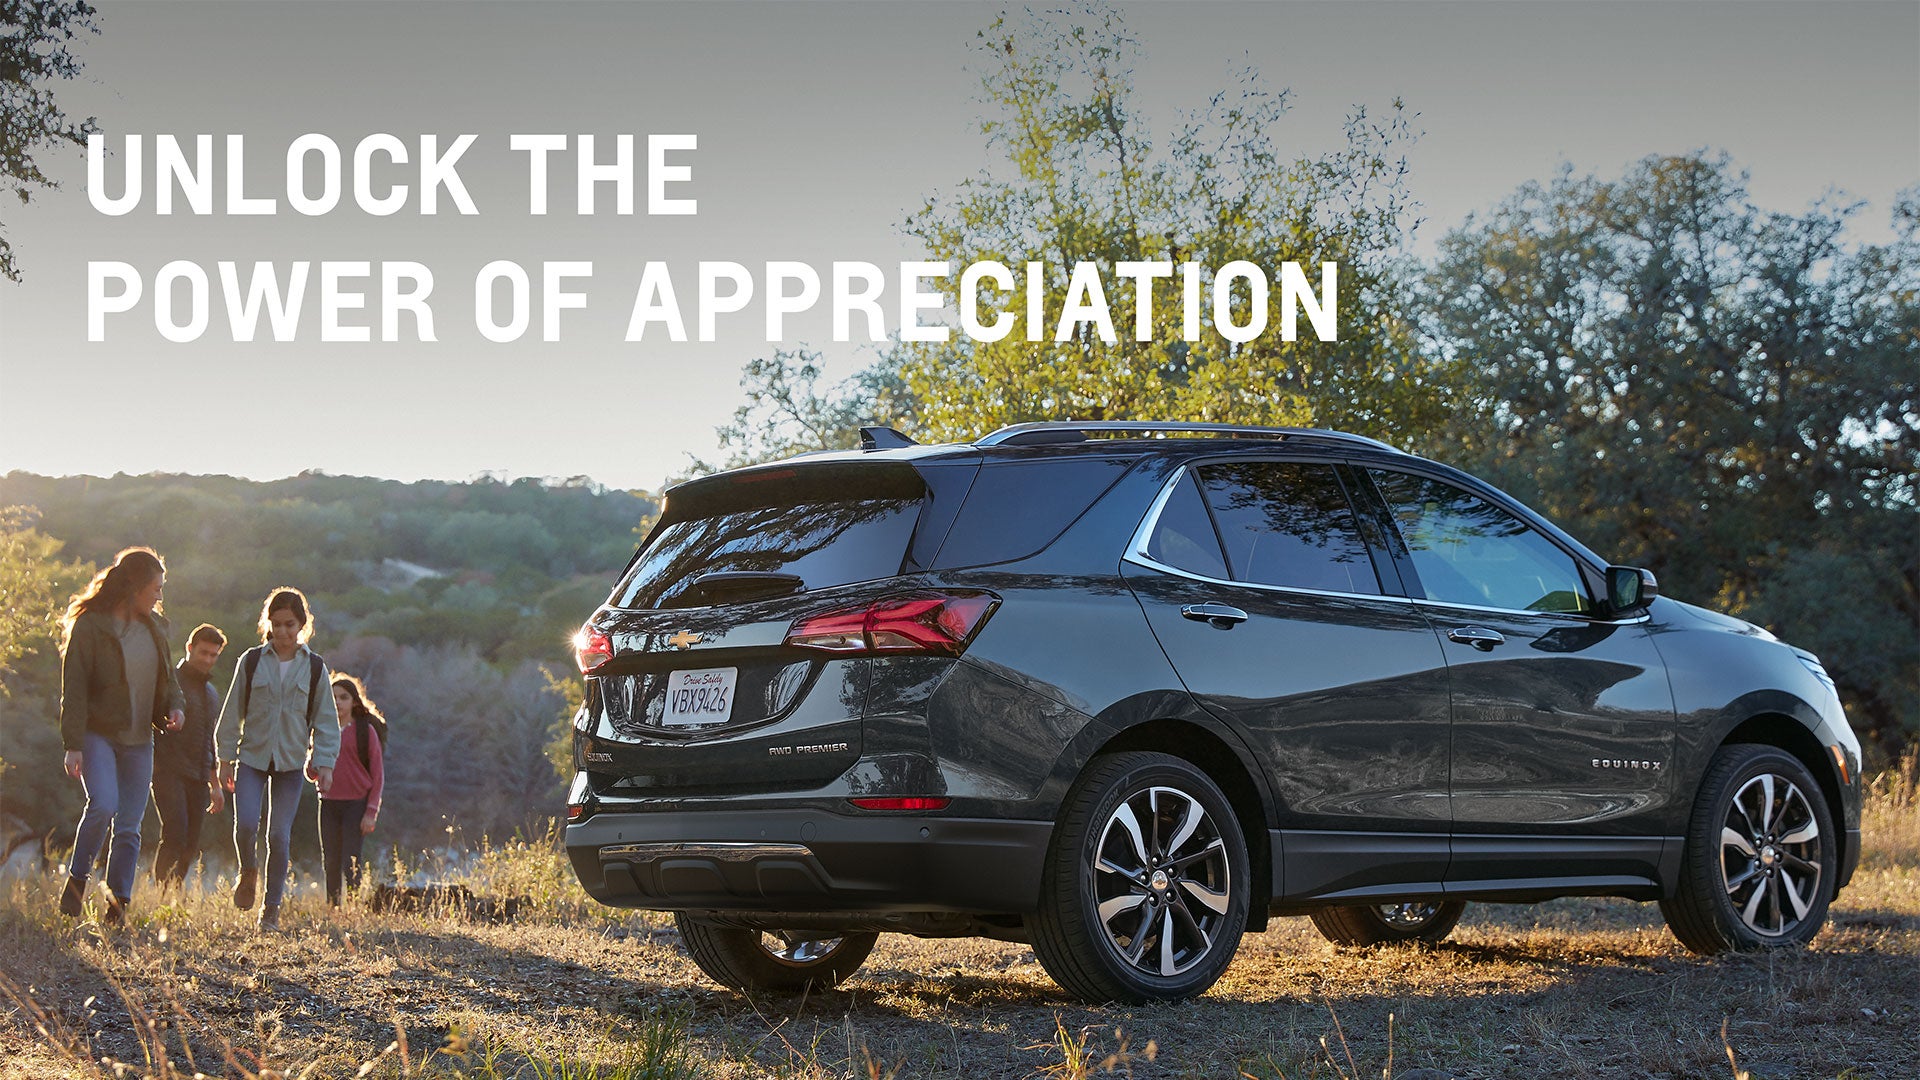 Unlock the power of appreciation | Chevrolet of Santa Fe in Santa Fe NM